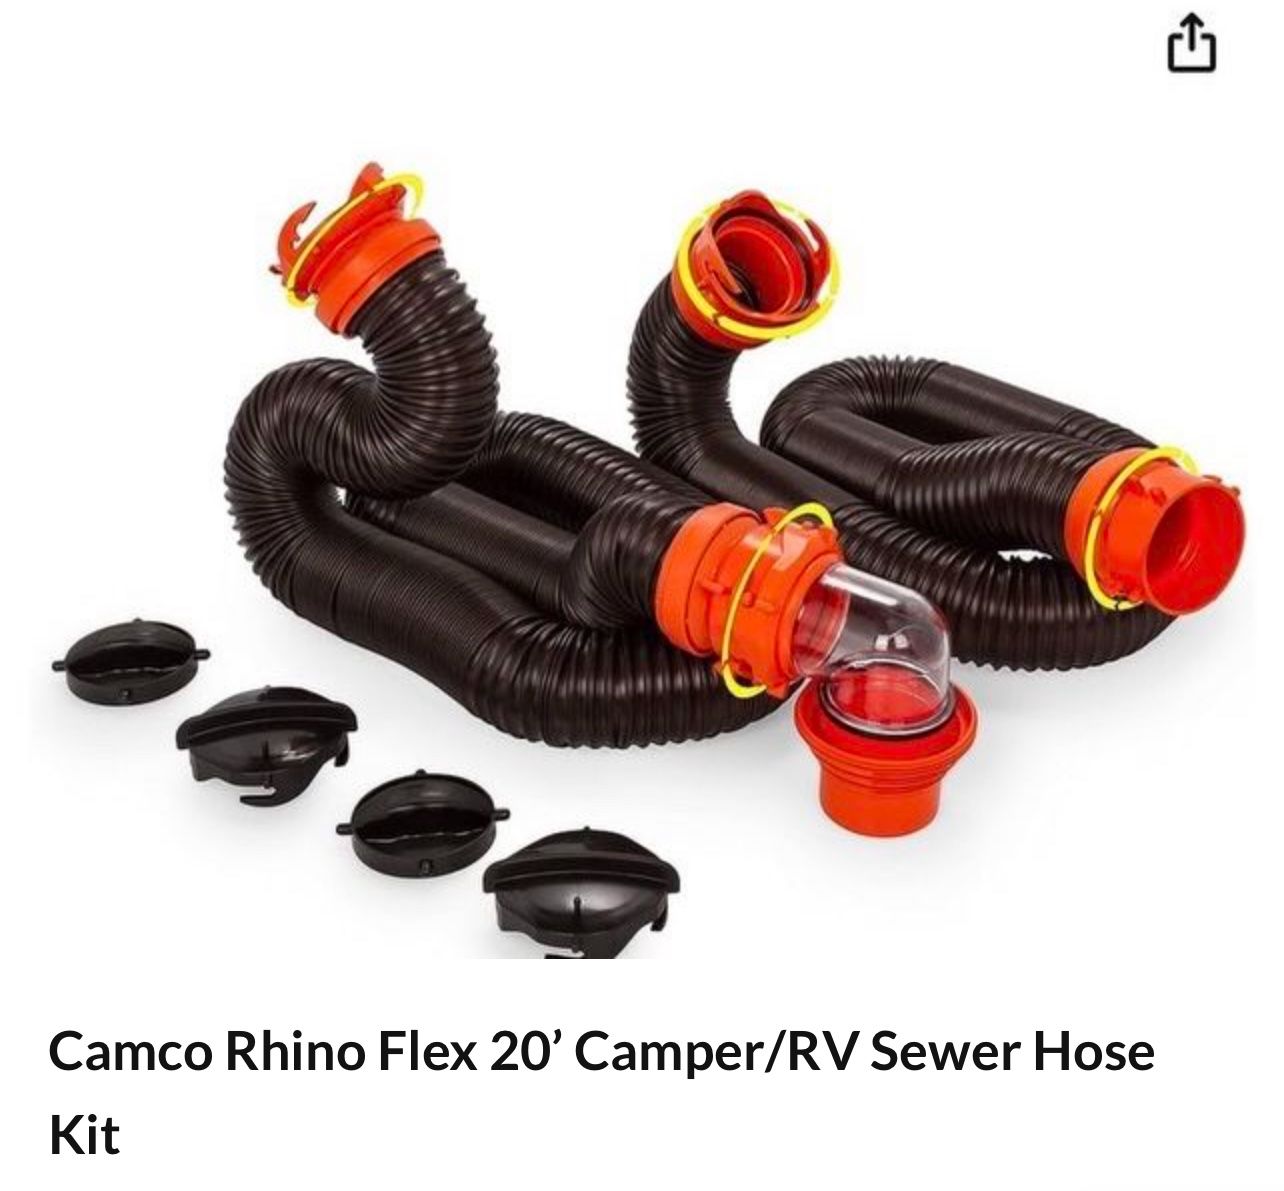 Camco Rhino Flex 20’ Camper/RV Sewer Hose Kit 